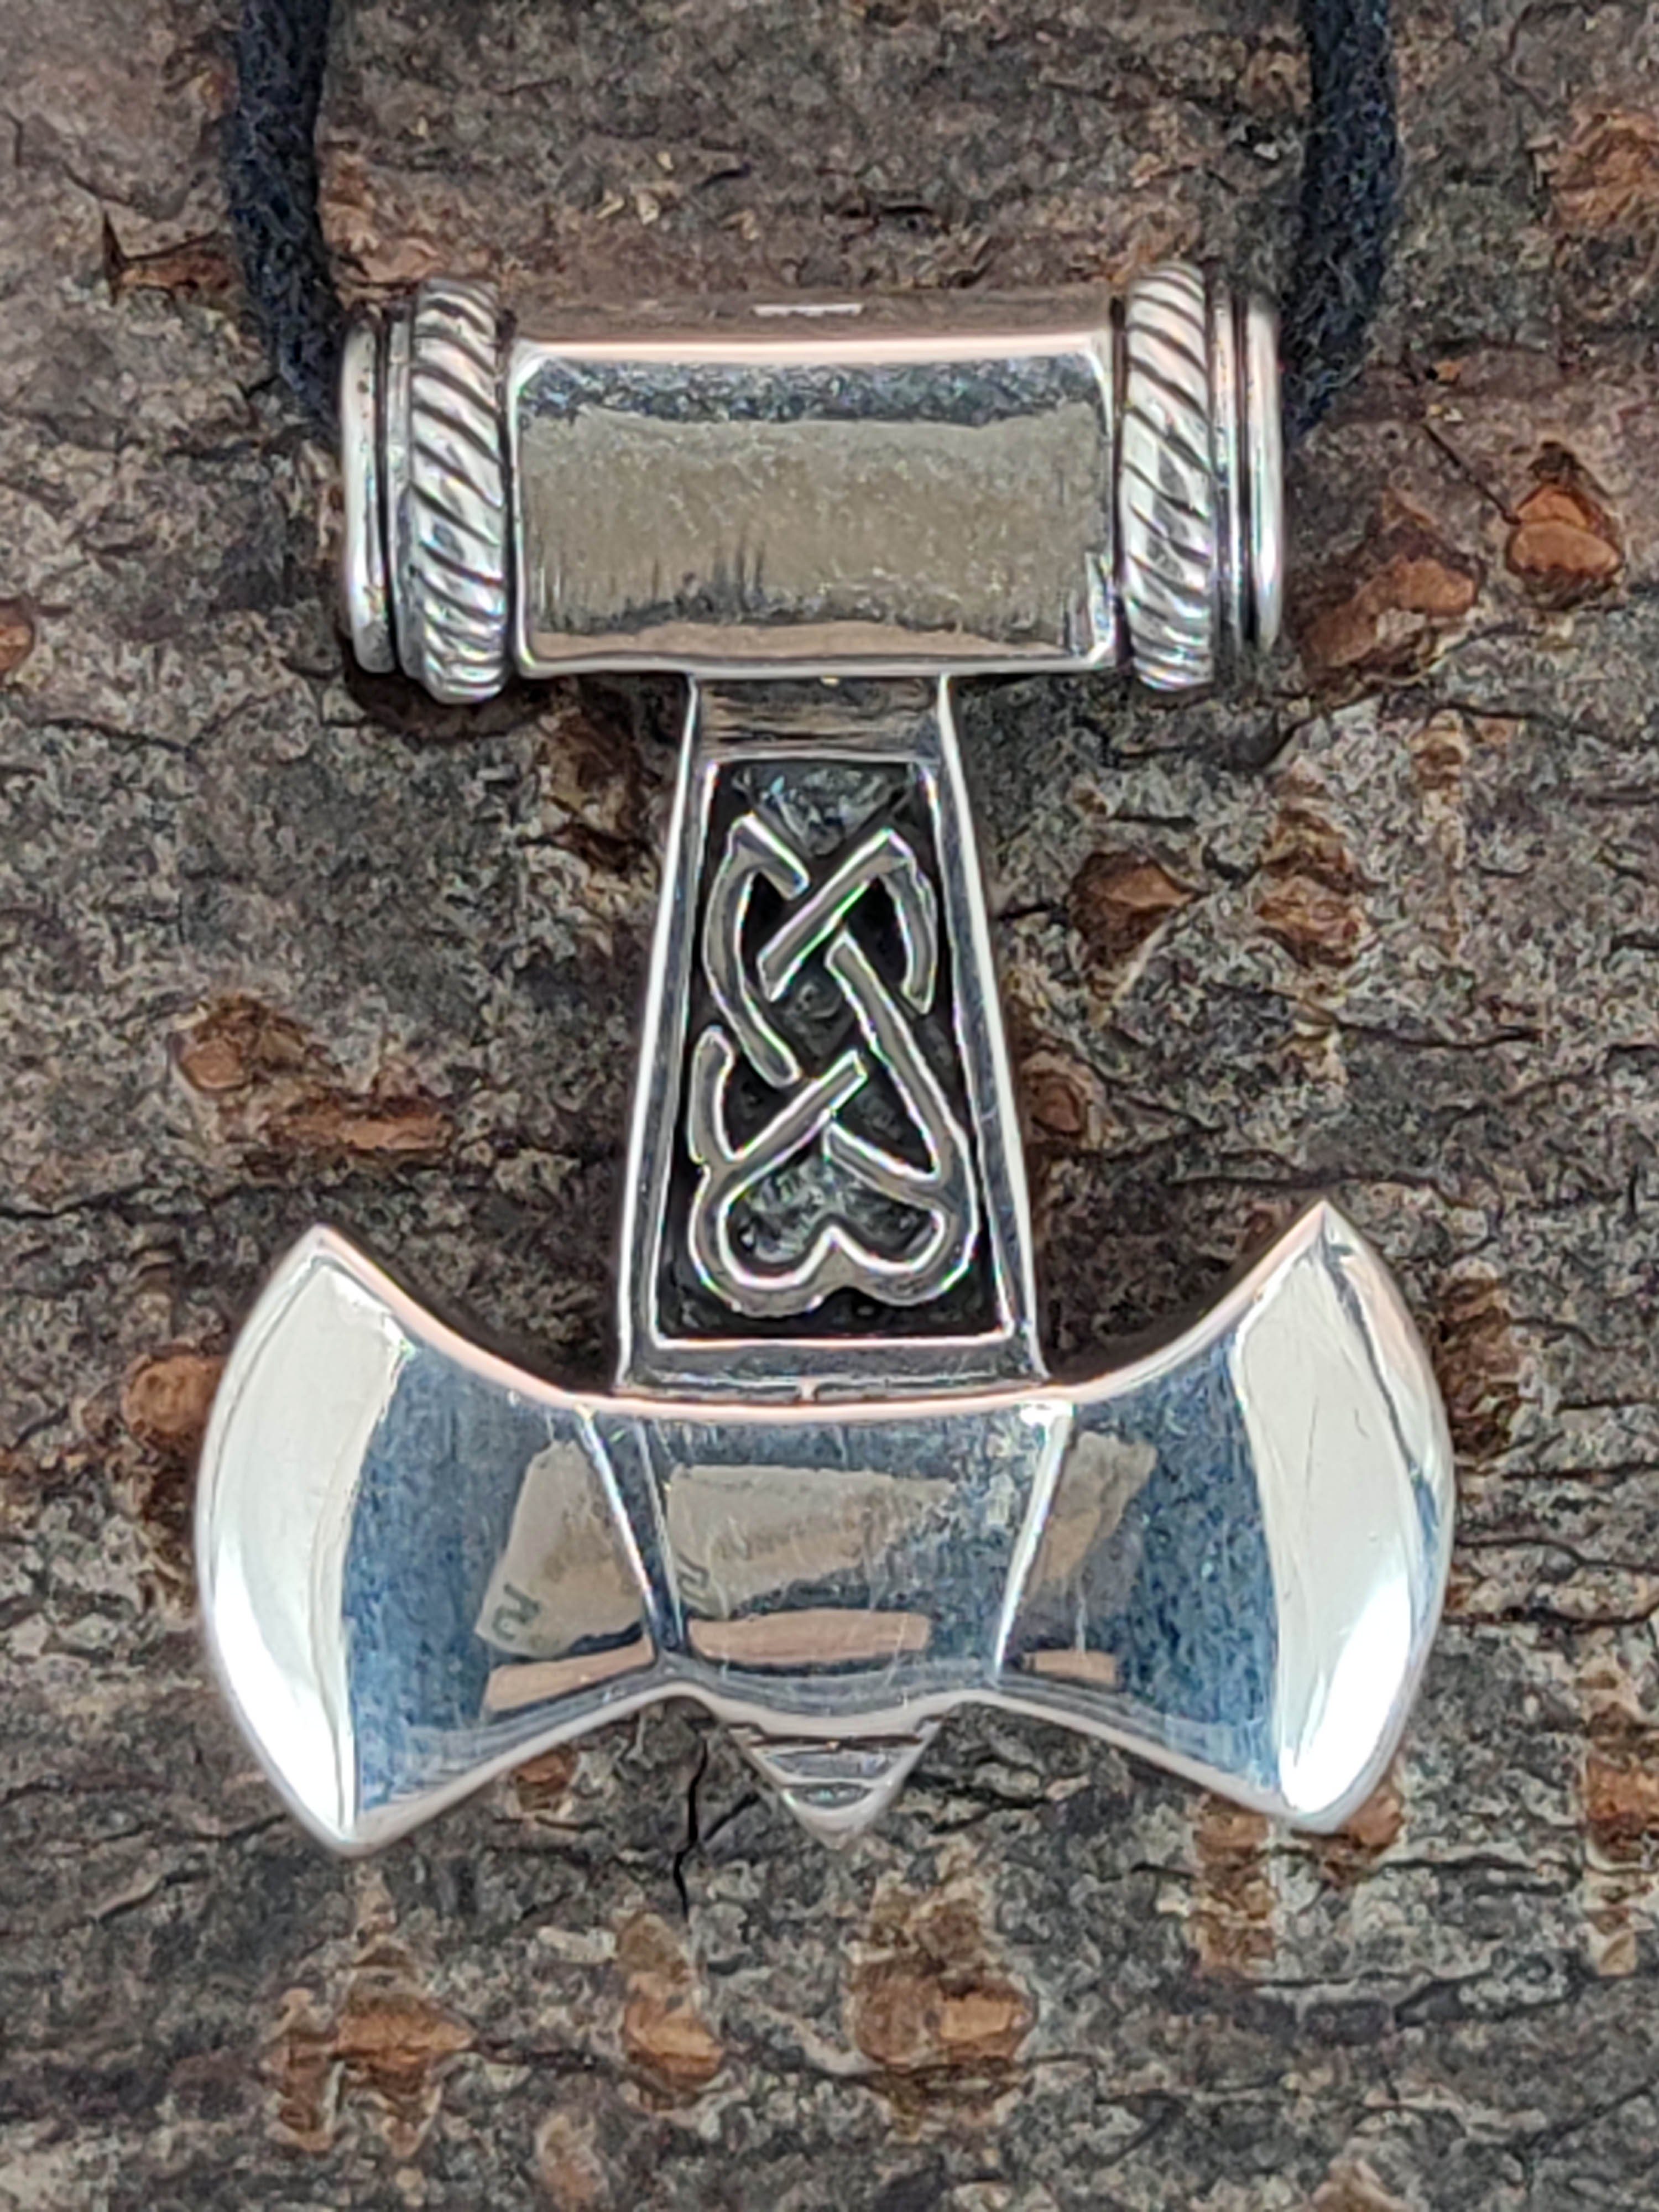 Axt Silber Kiss Mjölnir of Wikingeraxt Leather Wikinger Kettenanhänger Odin 925